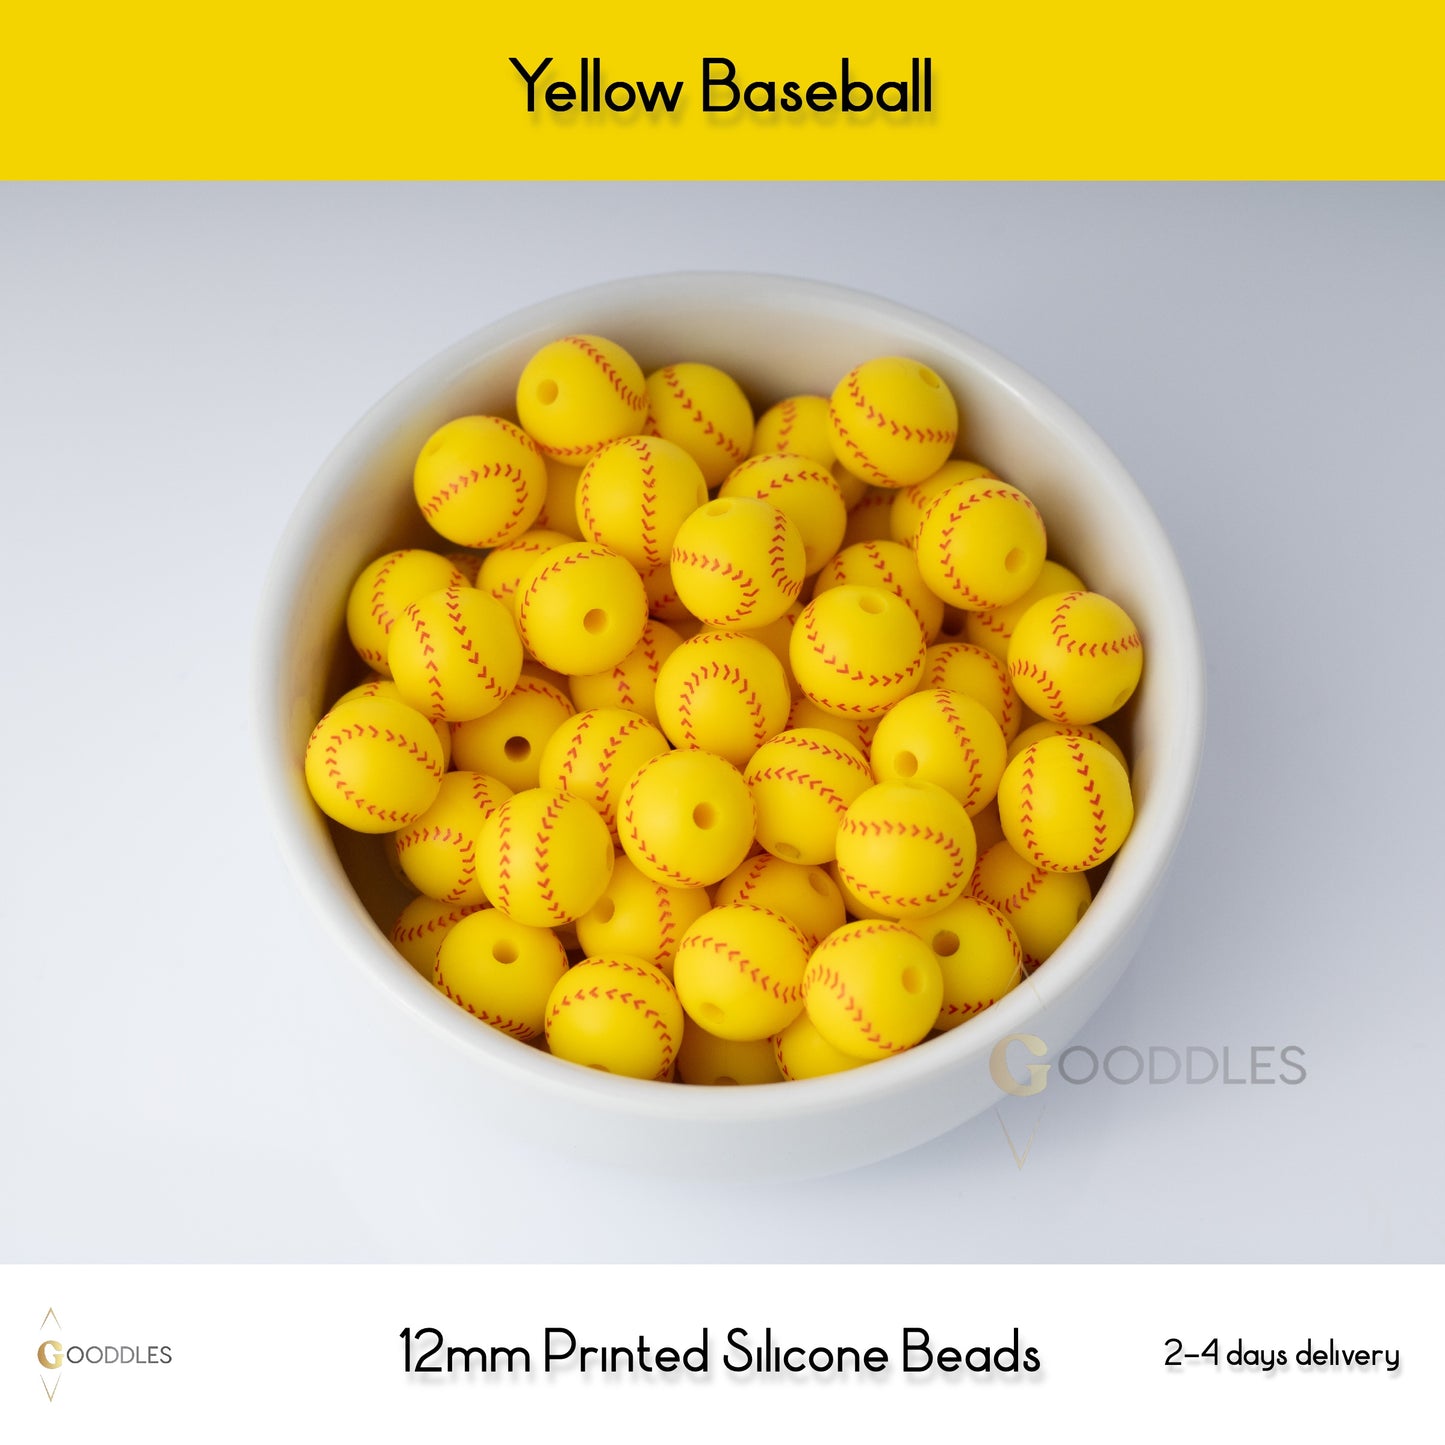 5pcs, Yellow Baseball Silicone Beads Printed Round Silicone Beads